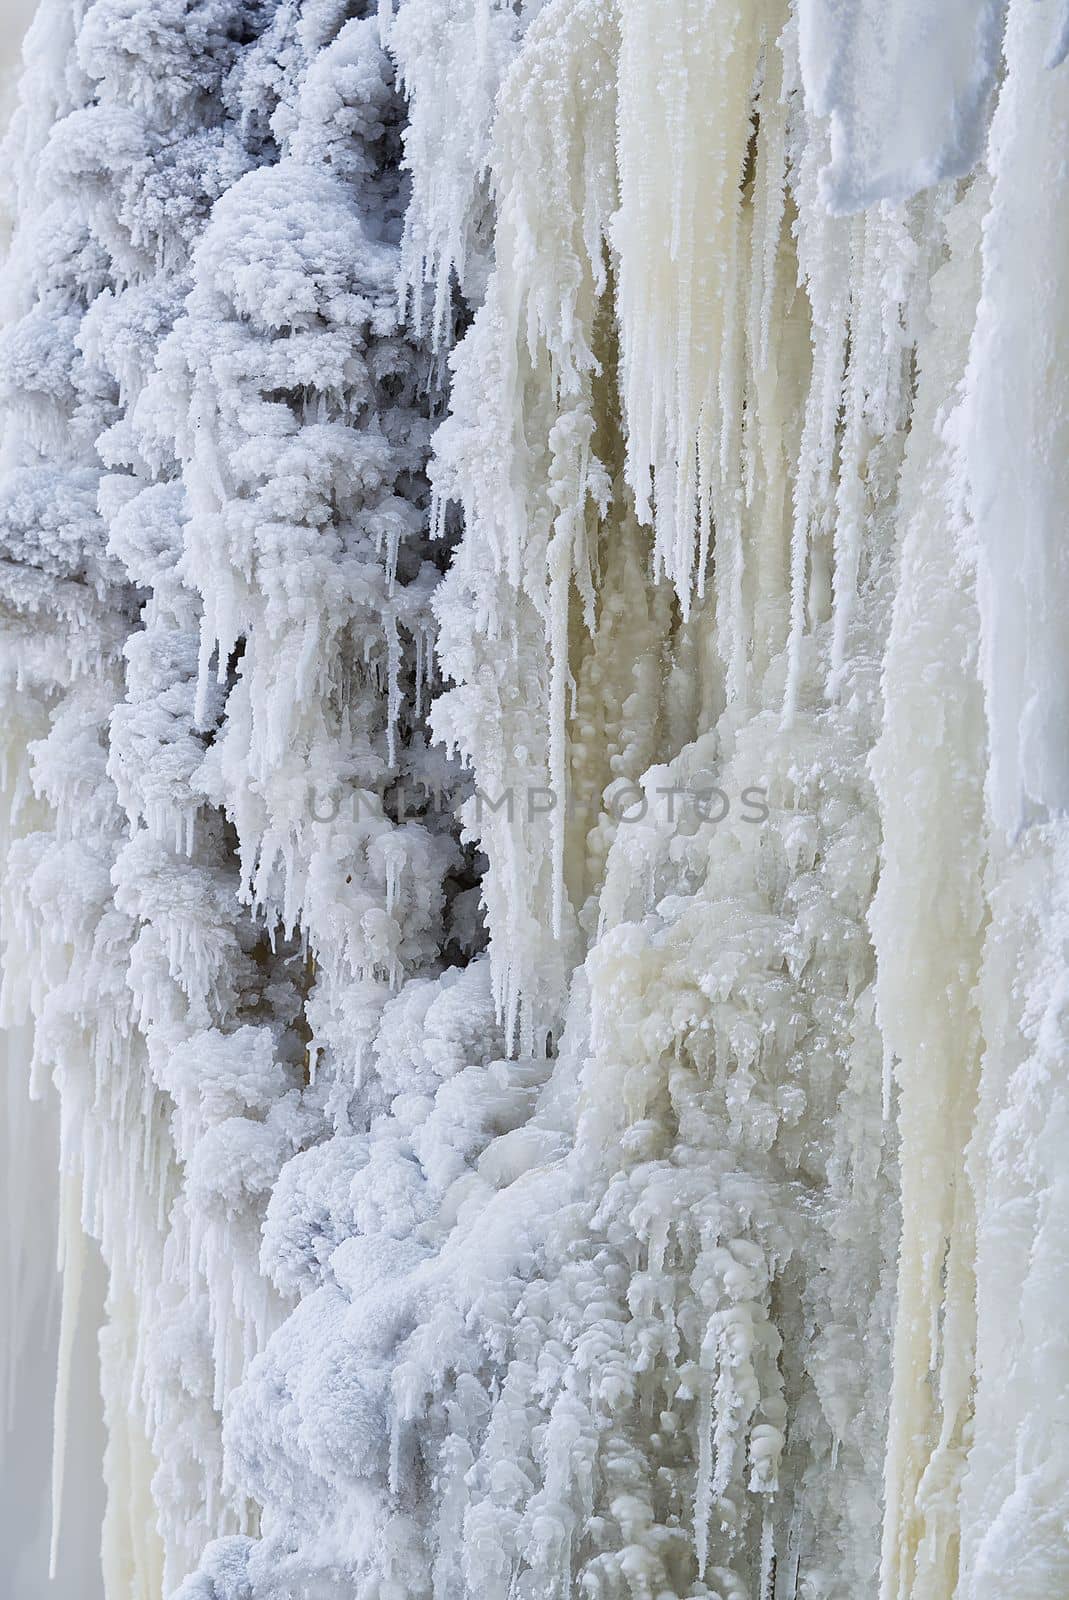 Frozen small mountain waterfall close up. Frozen Jagala Falls, Estonia by PhotoTime